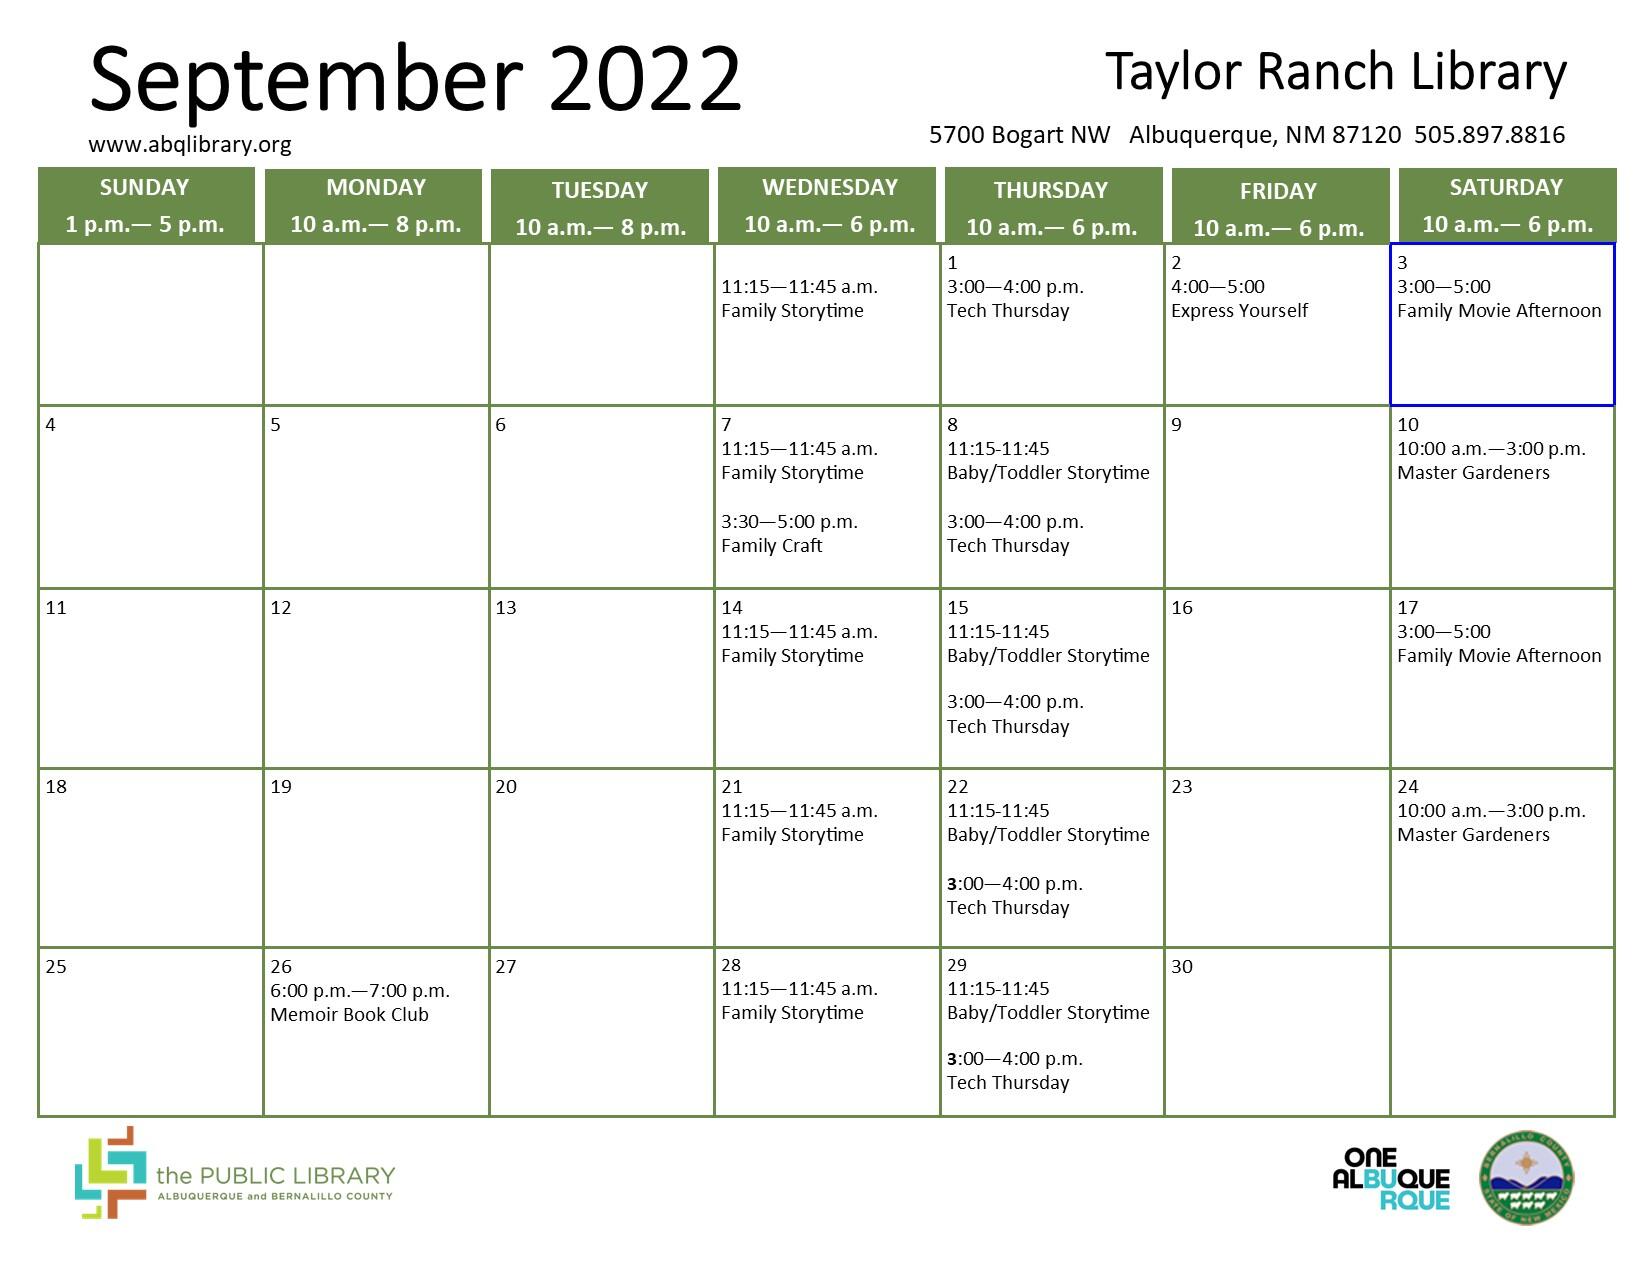 Taylor Ranch Library, September 2022 Calendar & Programs (City of